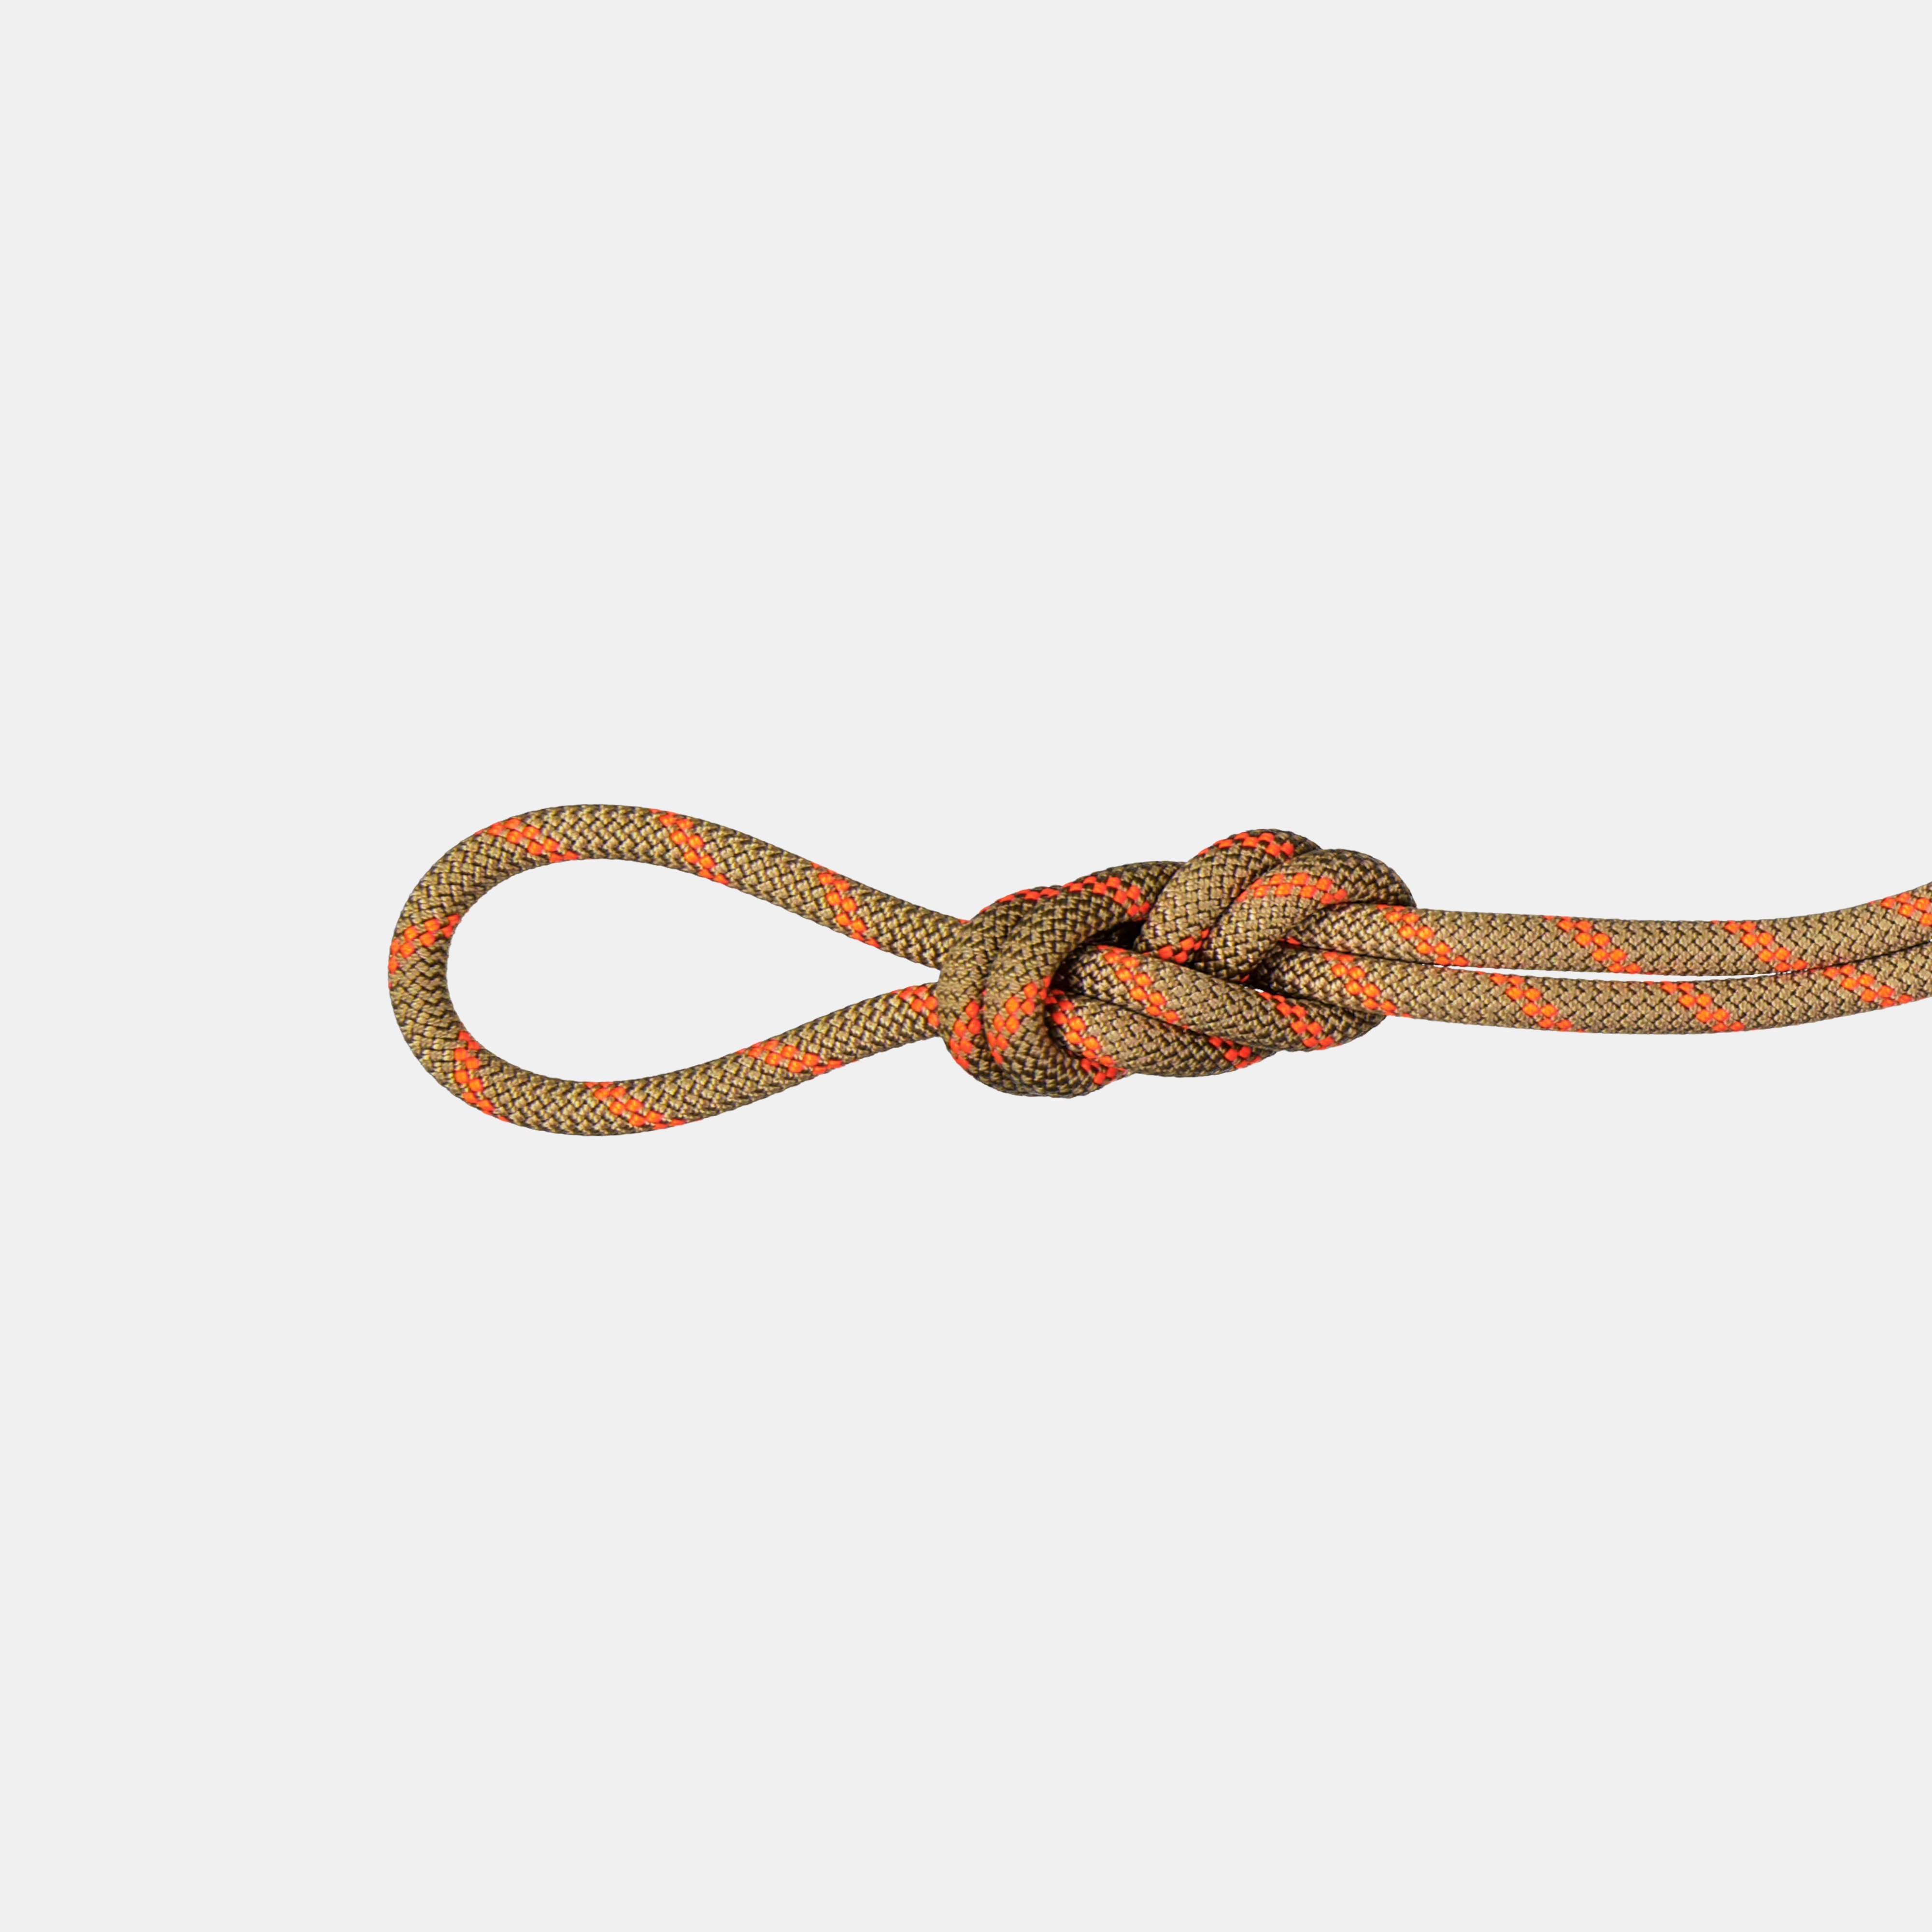 8.0 Alpine Dry Rope thumbnail